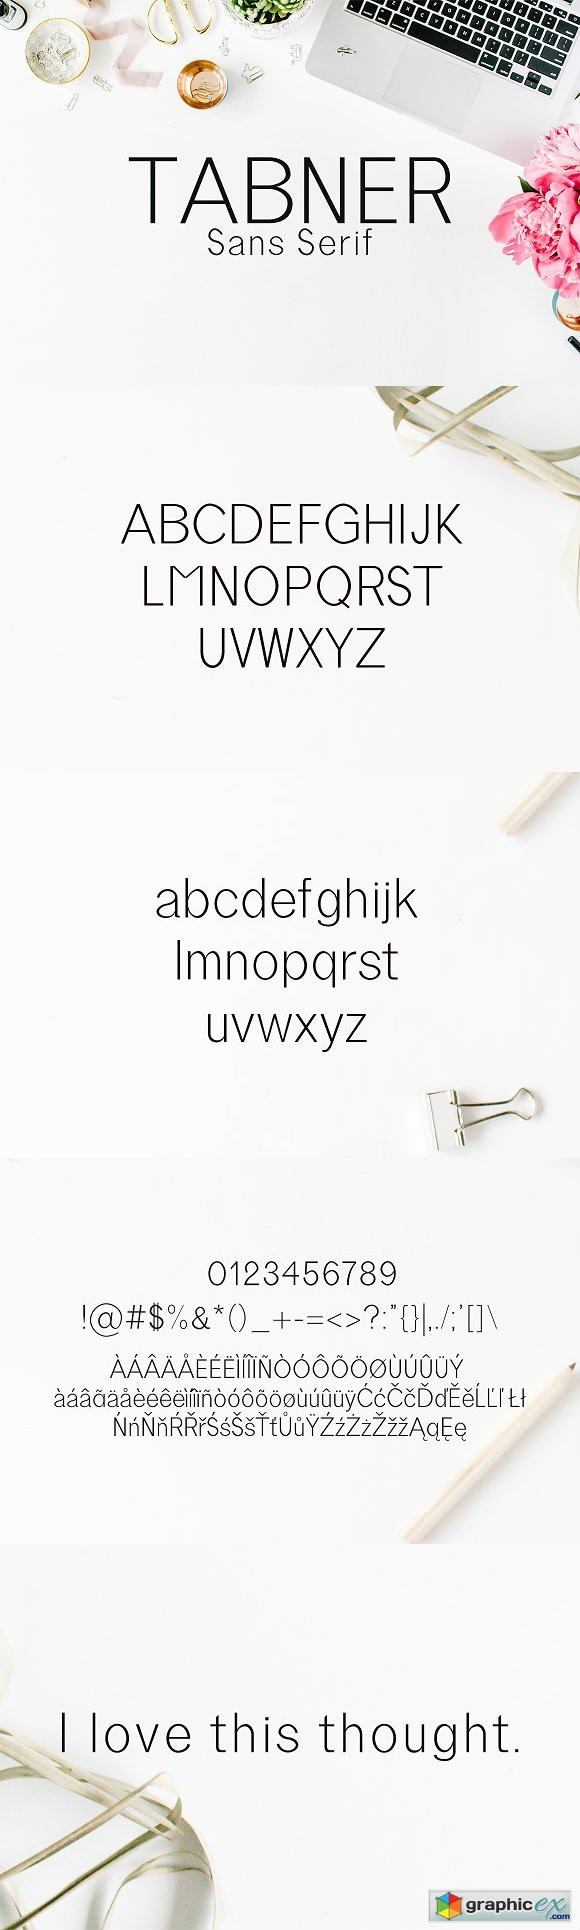 Tabner Sans Serif Typeface Fonts